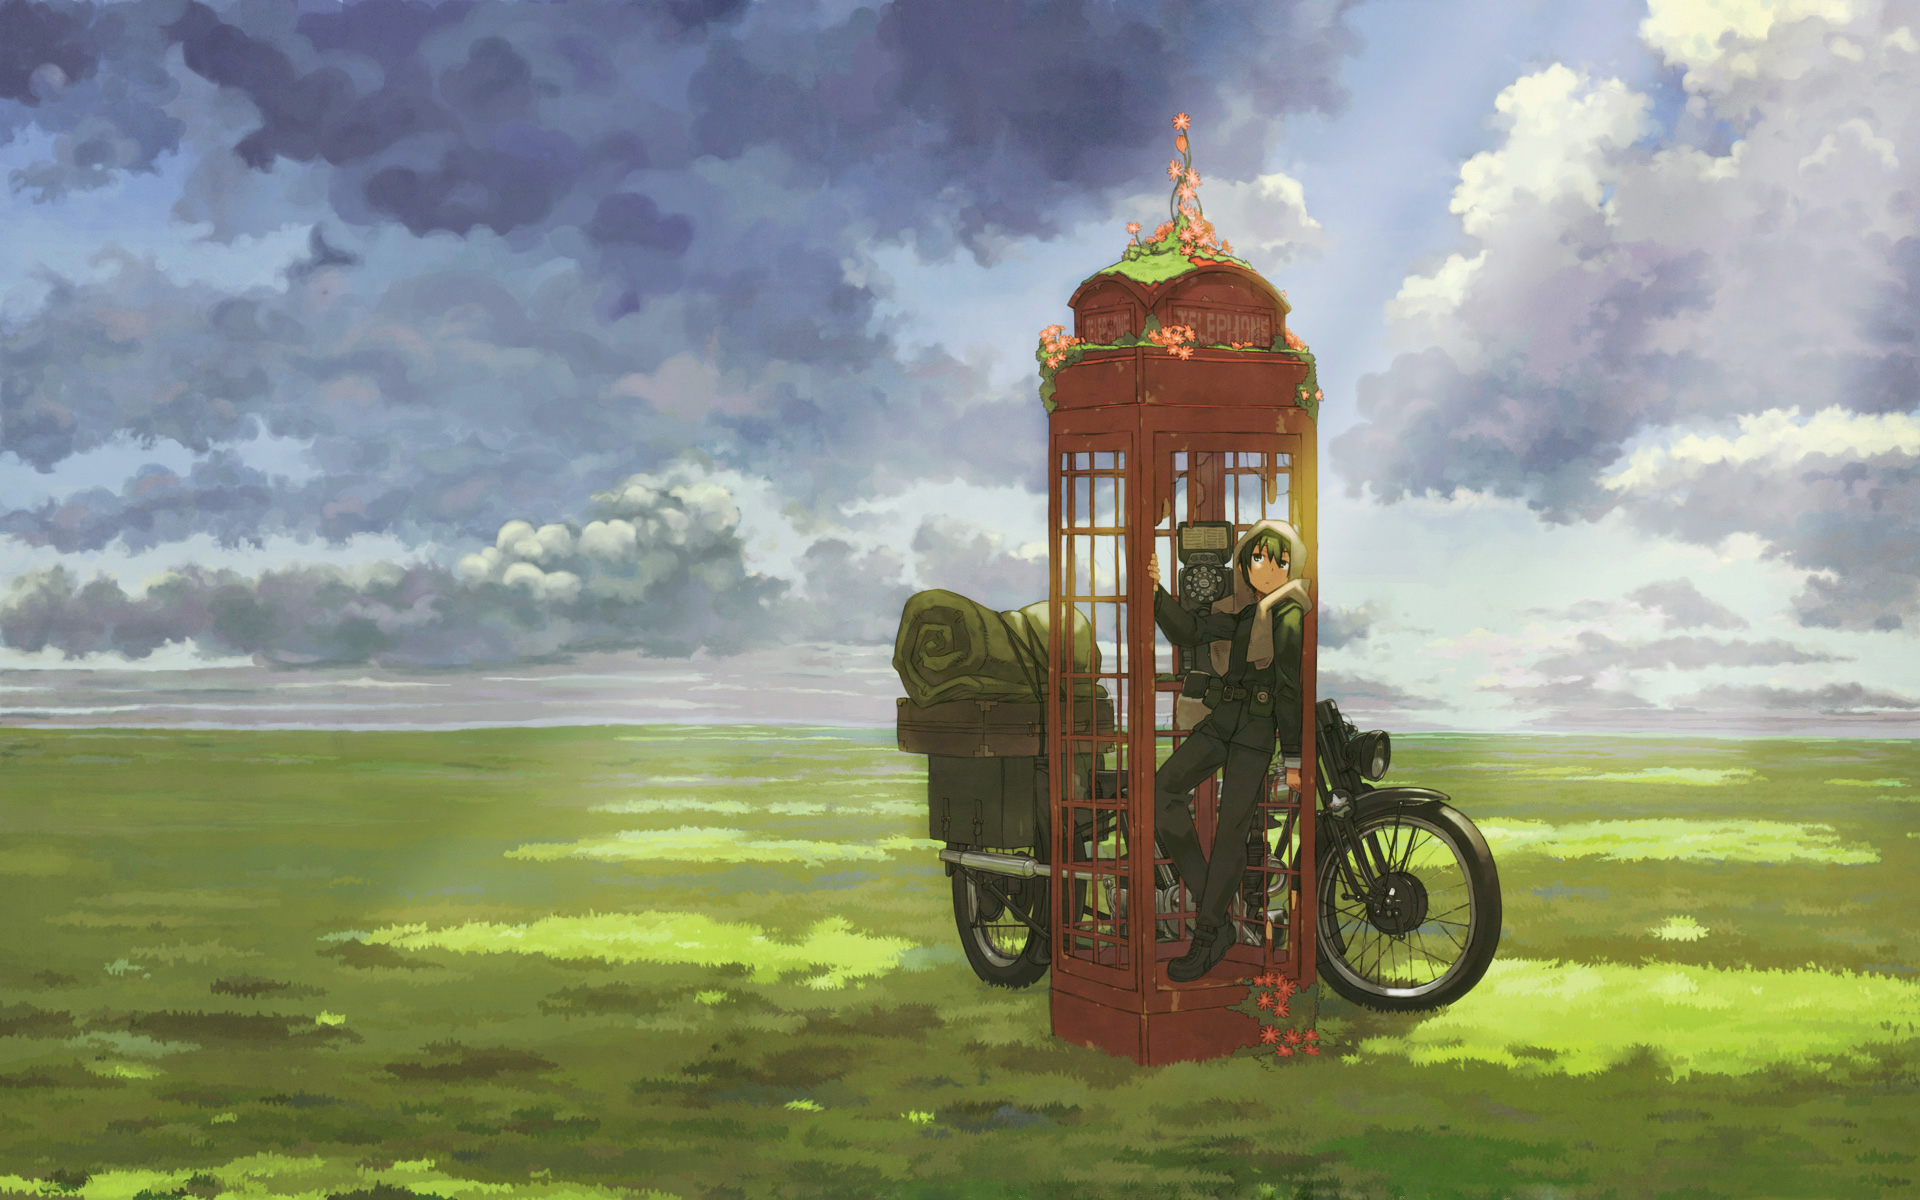 Kino's Journey: The Beautiful World - Other & Anime Background Wallpapers  on Desktop Nexus (Image 1783511)